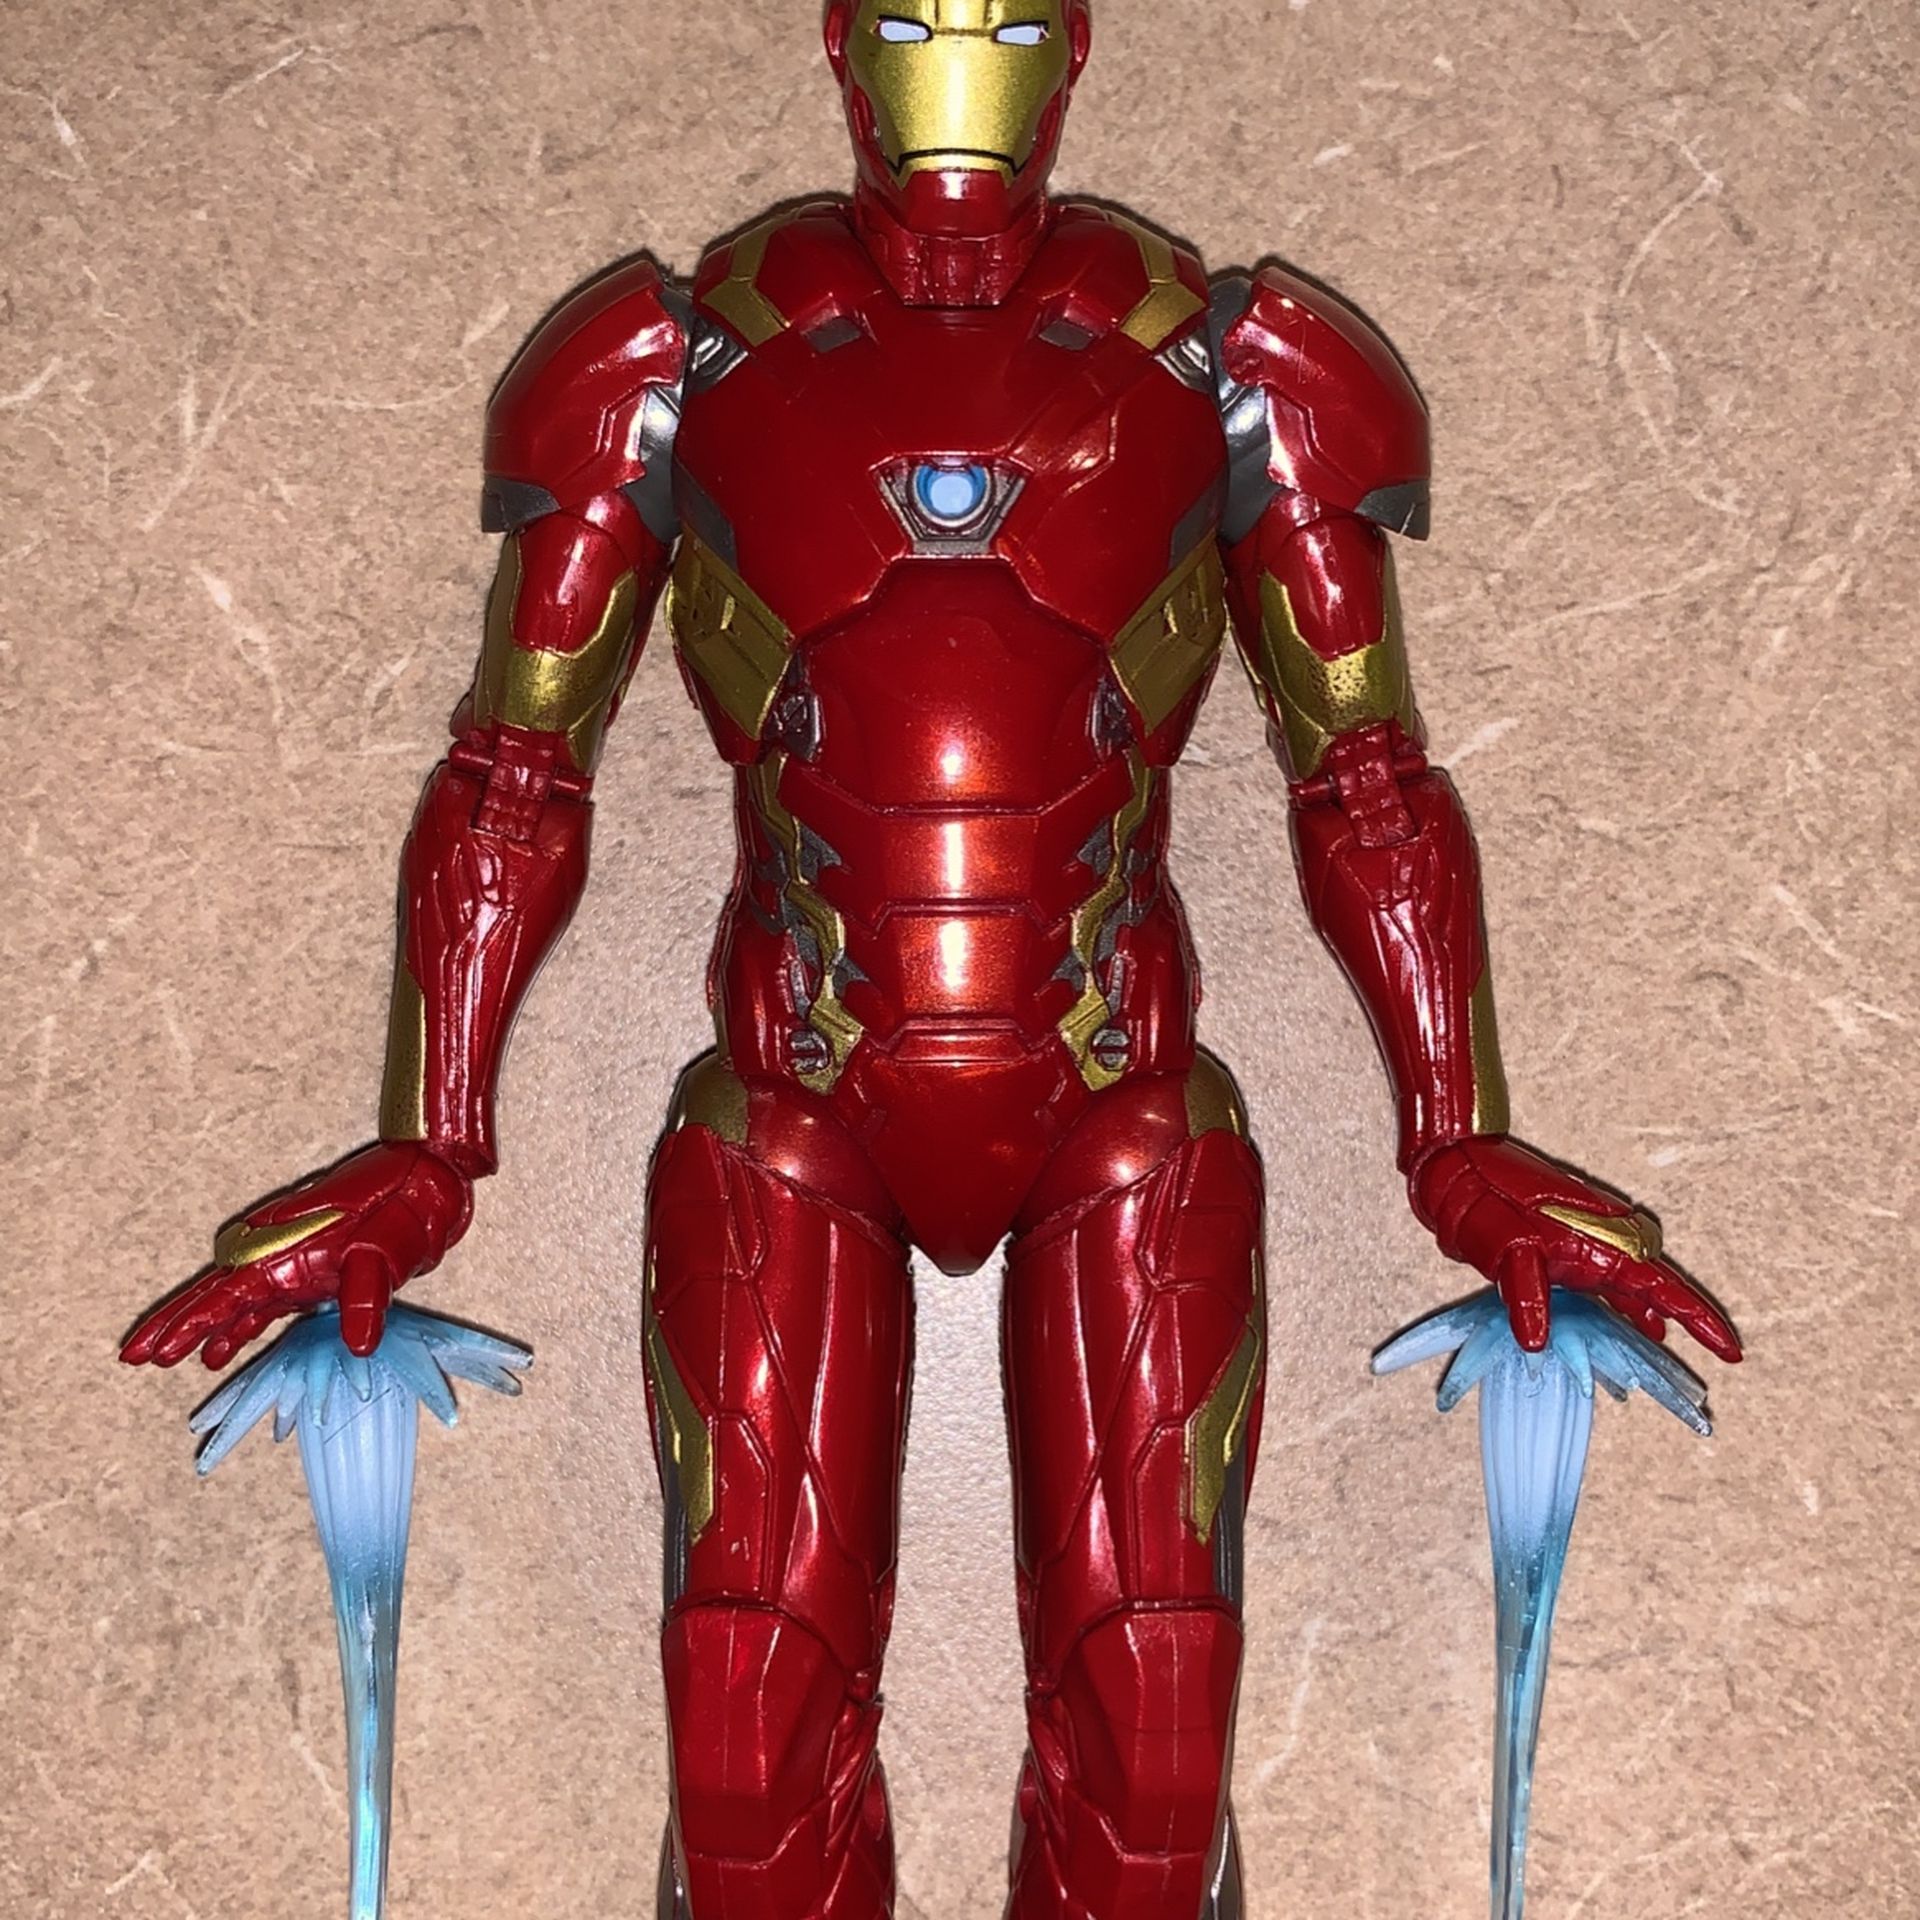 Marvel legends “Captain America Civil War” Ironman Action Figure